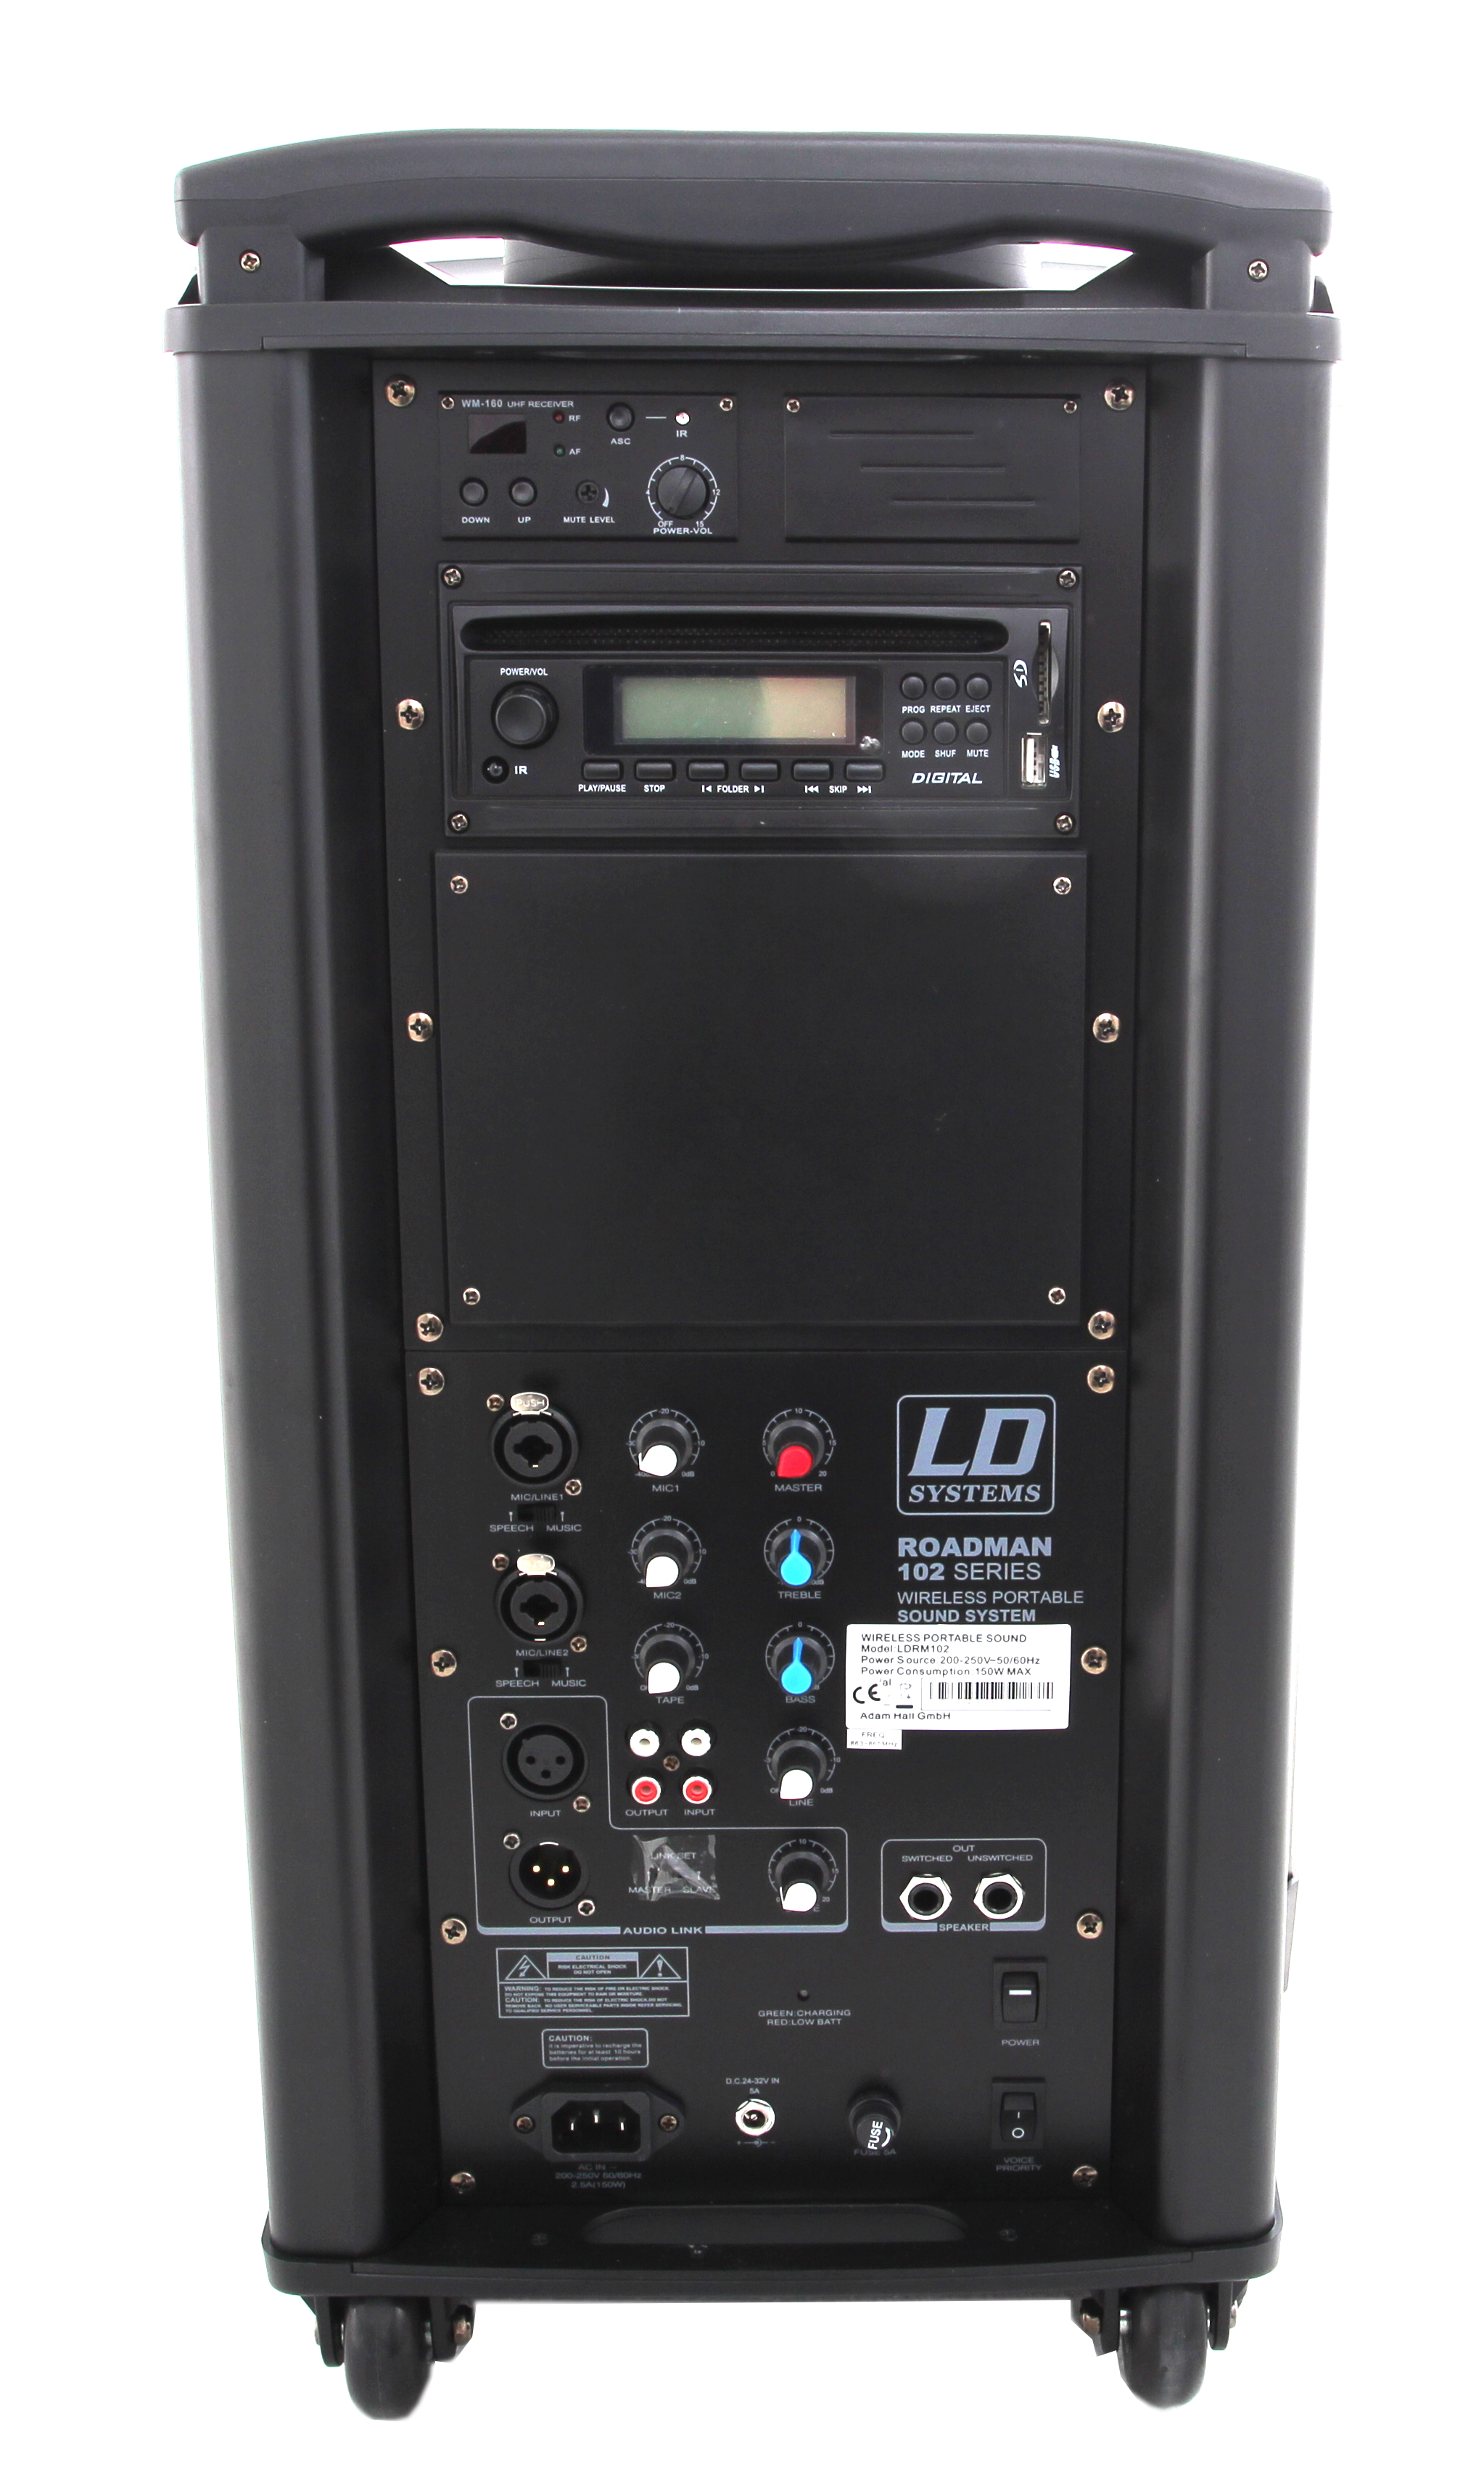 LD Systems Roadman 102 B-Ware